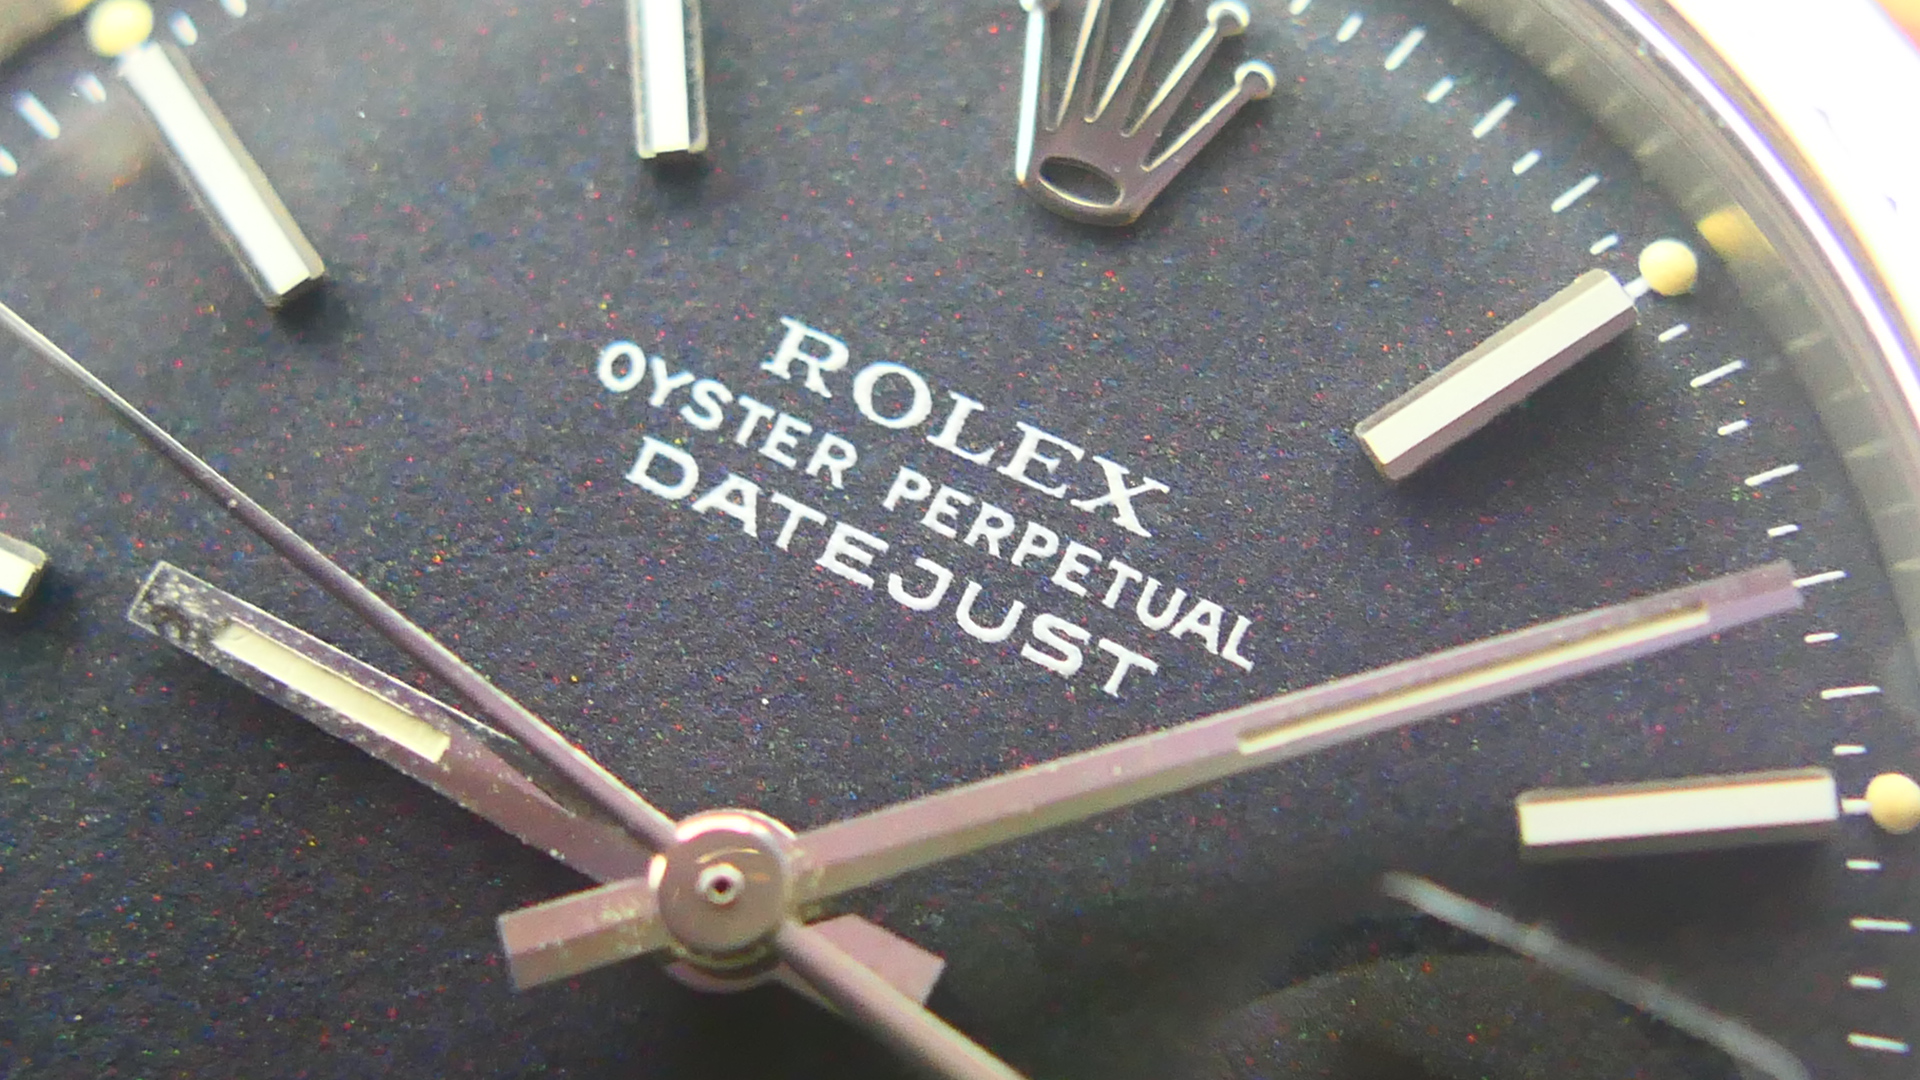 ROLEX Watch 腕錶交流- 美好時光Vintage Rolex